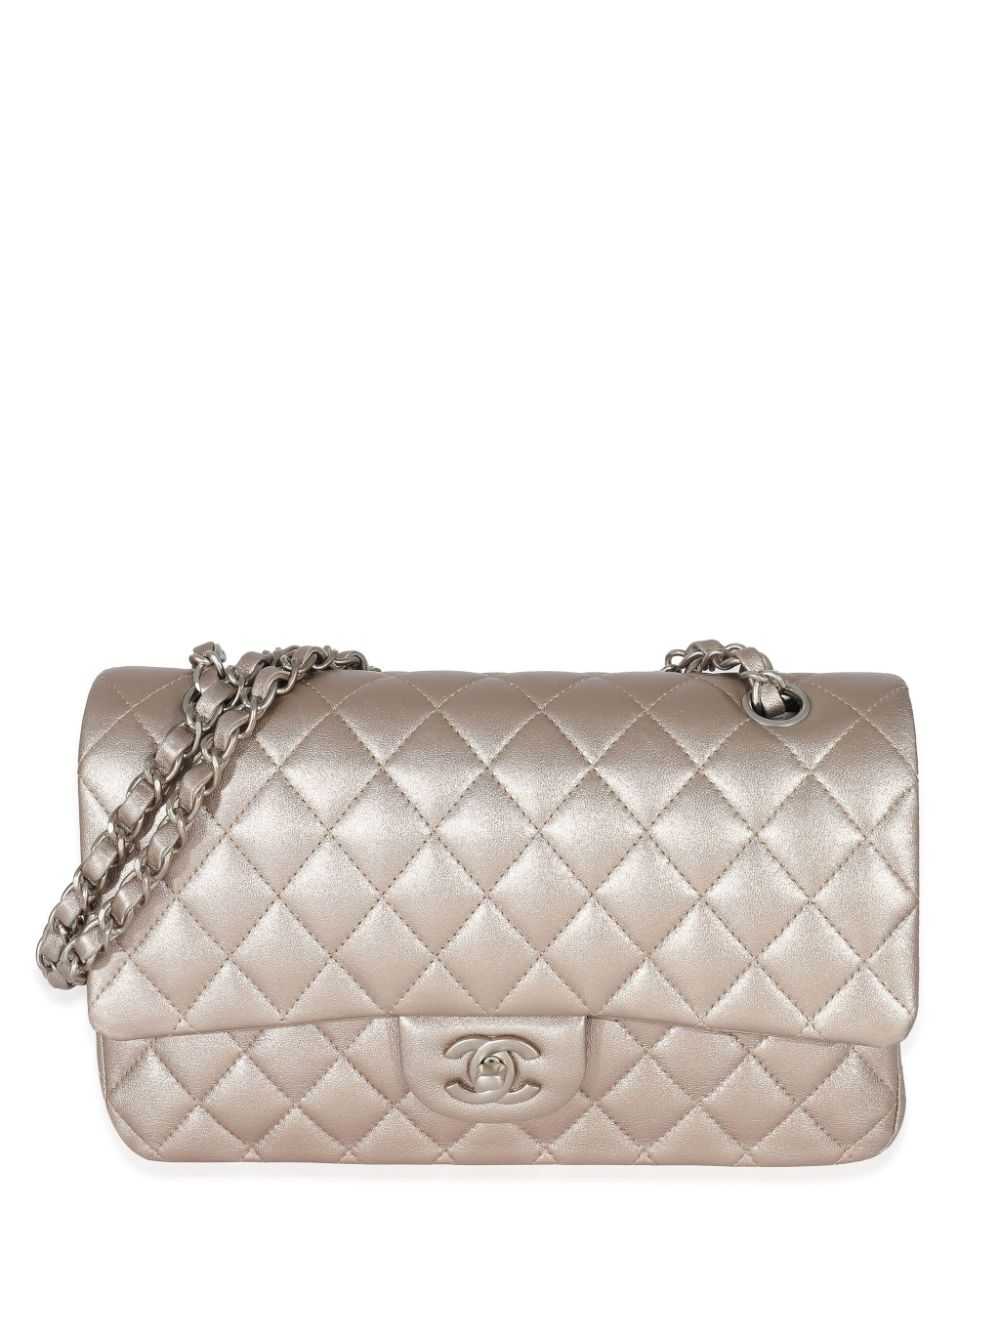 Chanel Pre-owned Medium Gabrielle Shoulder Bag - Neutrals